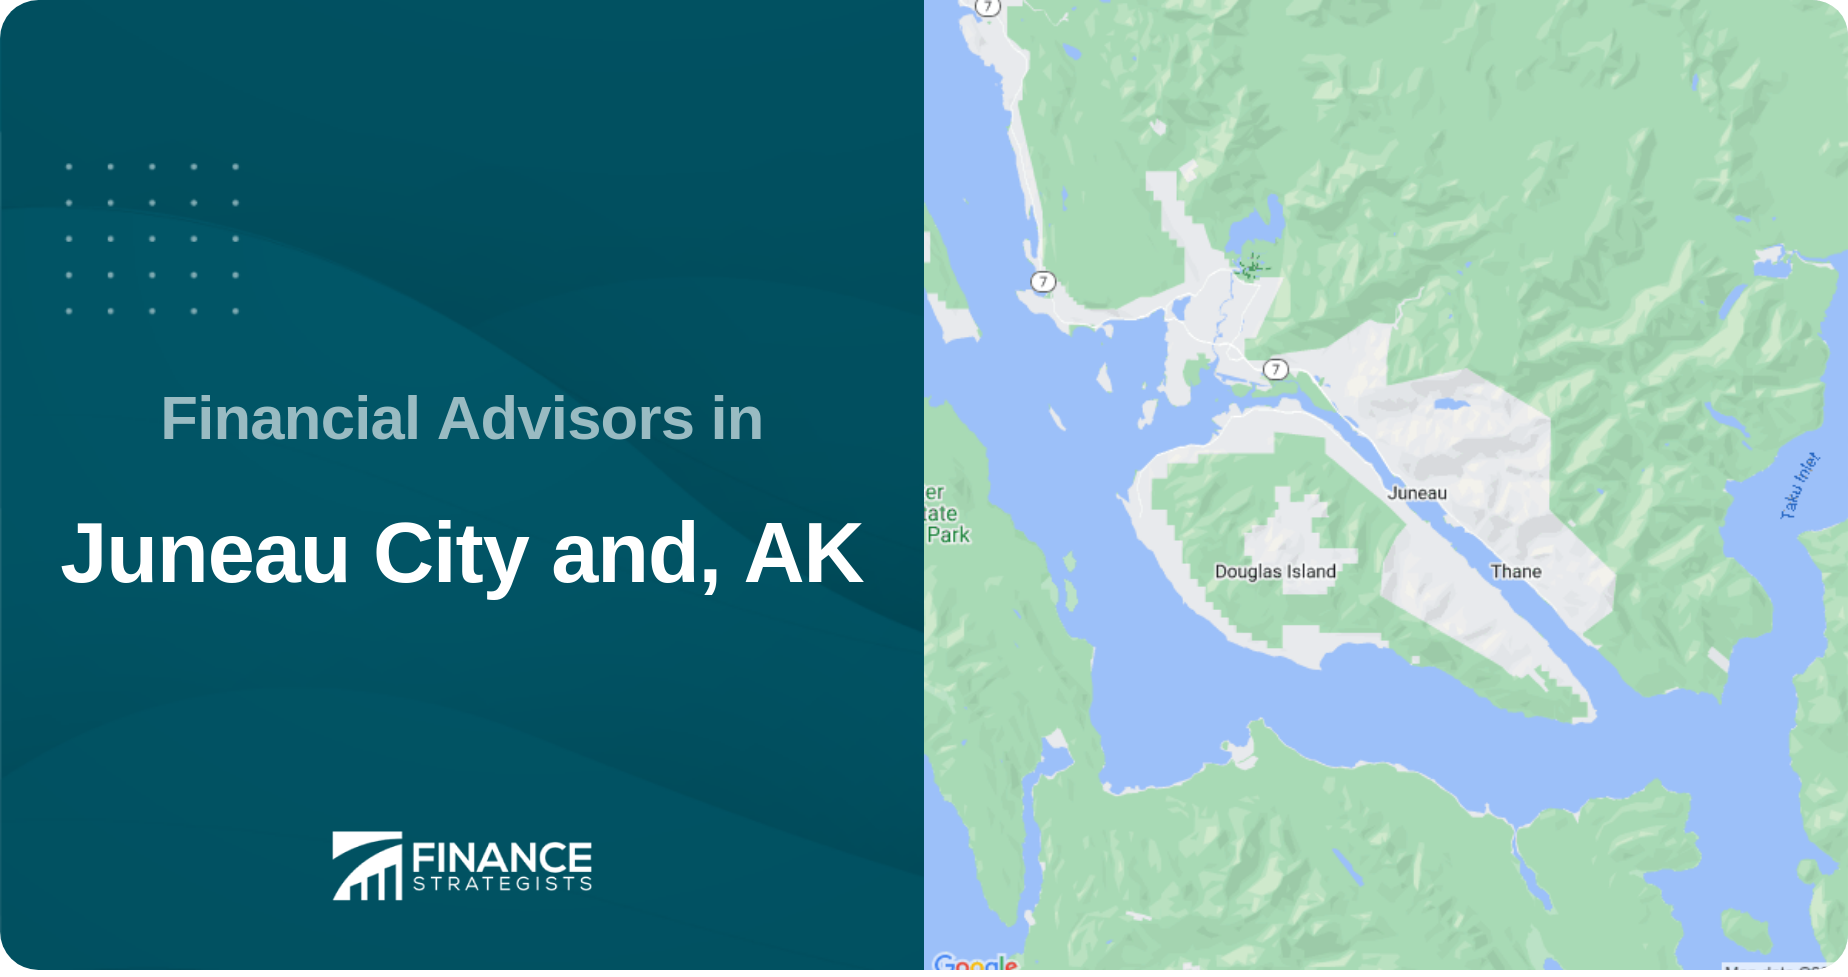 Financial Advisors in Juneau City and Borough, AK